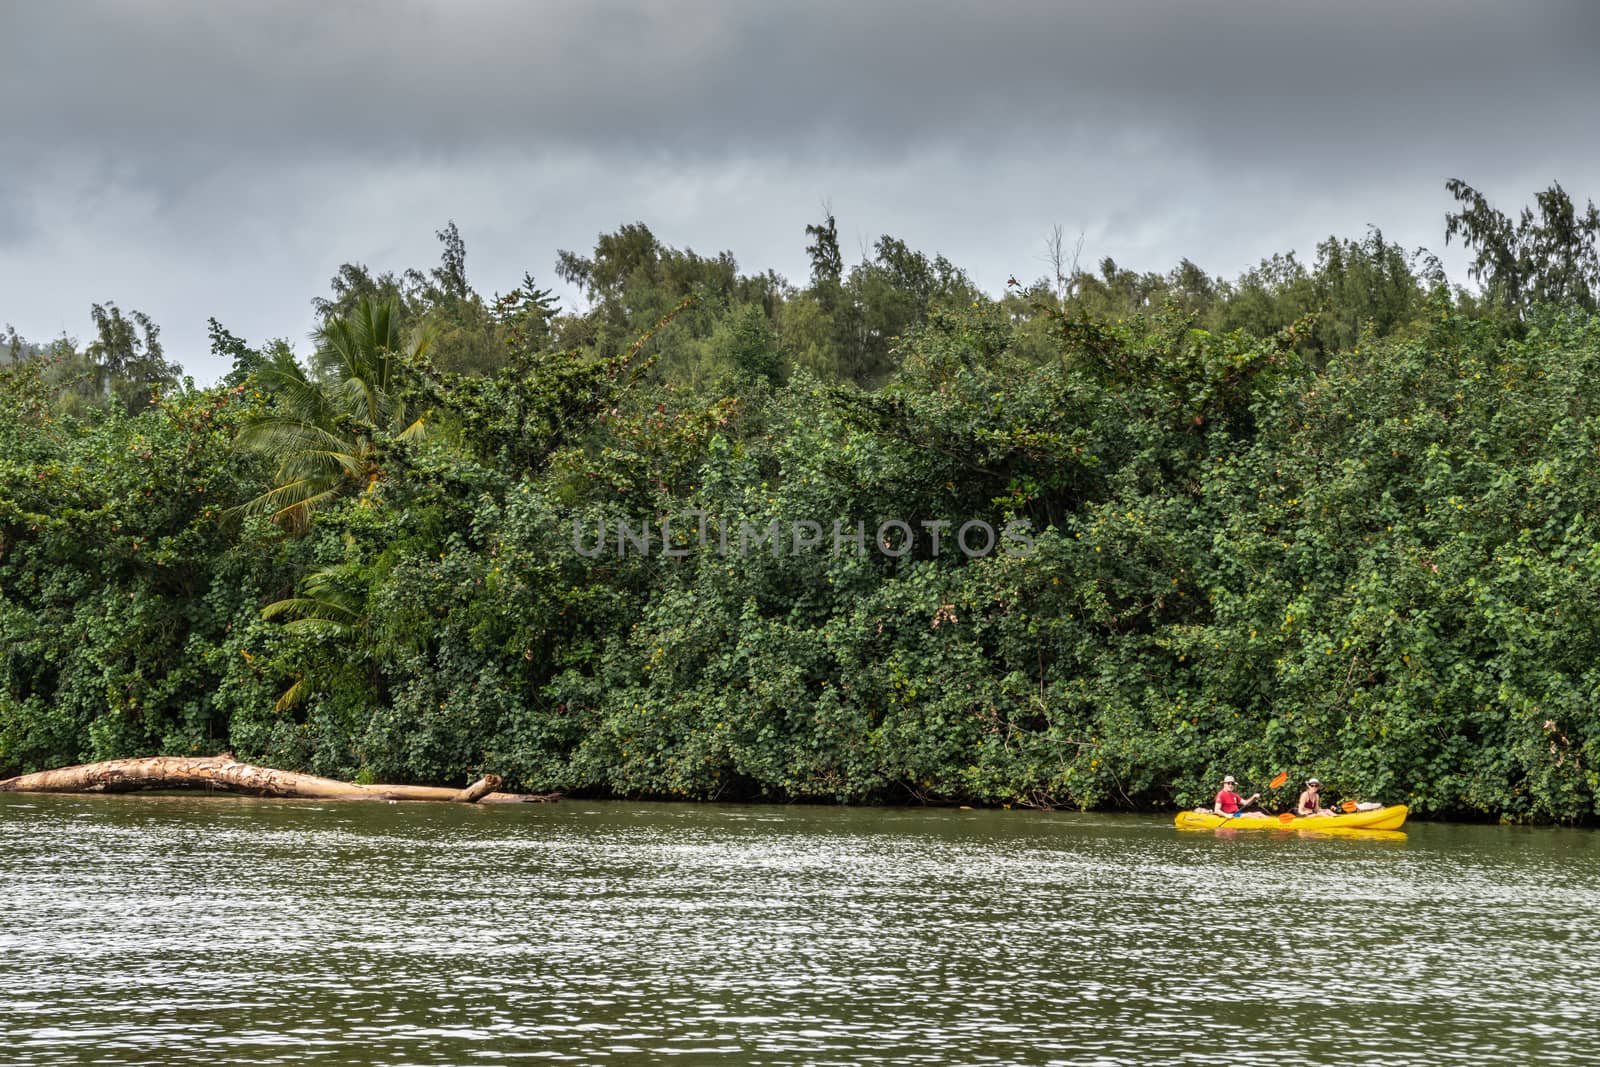 Nawiliwili, Kauai, Hawaii, USA. - January 16, 2020: Yellow Canoe with 2 people on greenish South Fork Wailua River in front of green belt of trees under gray rainy cloudscape.